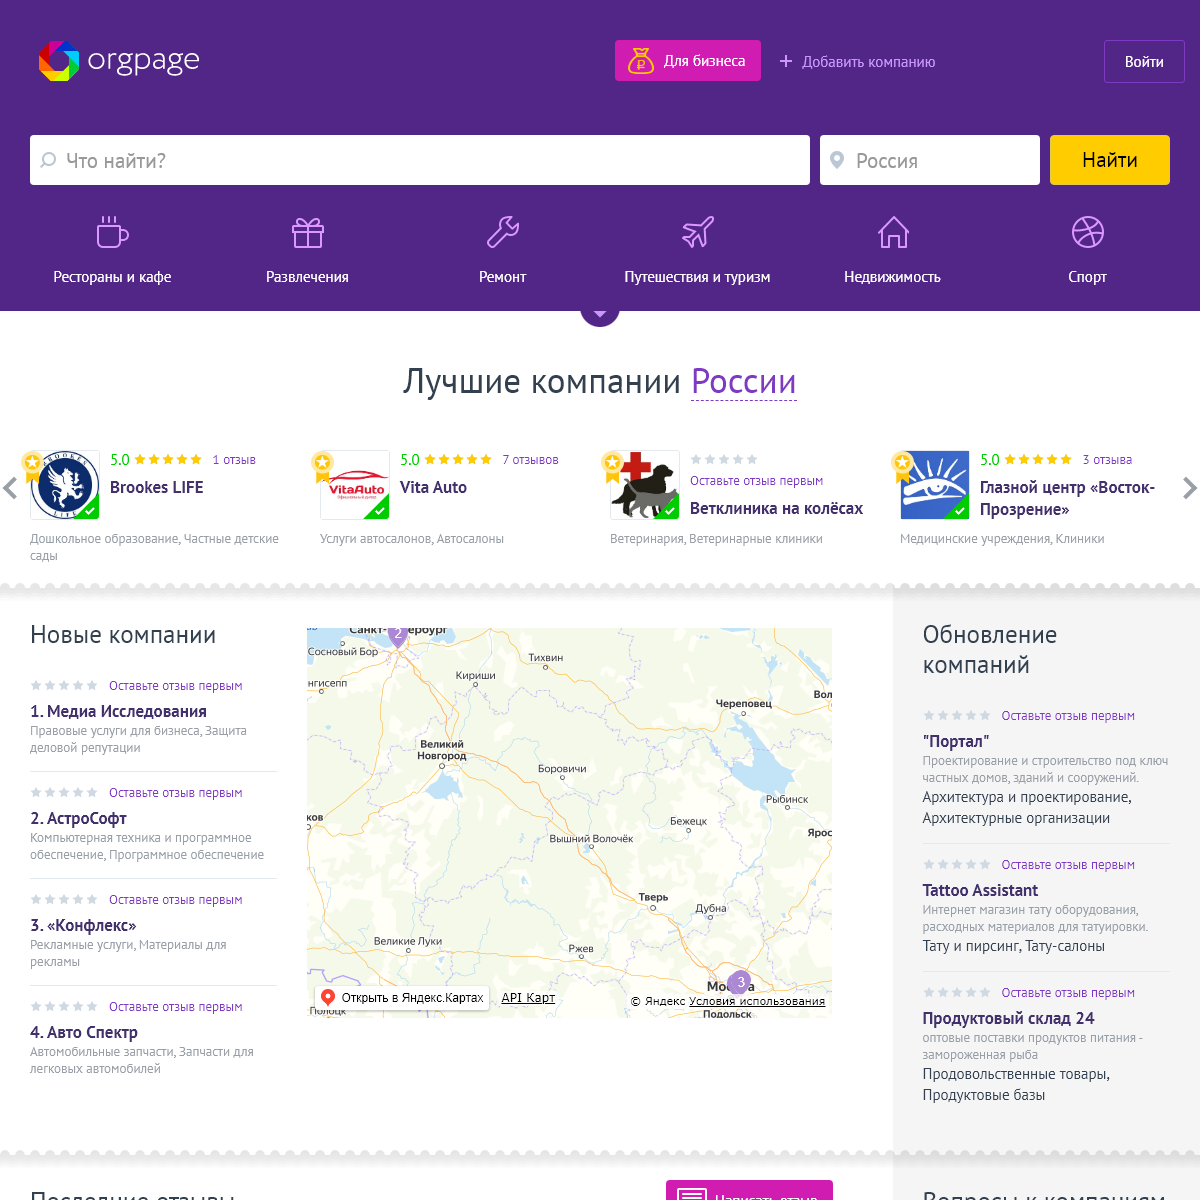 A complete backup of orgpage.ru